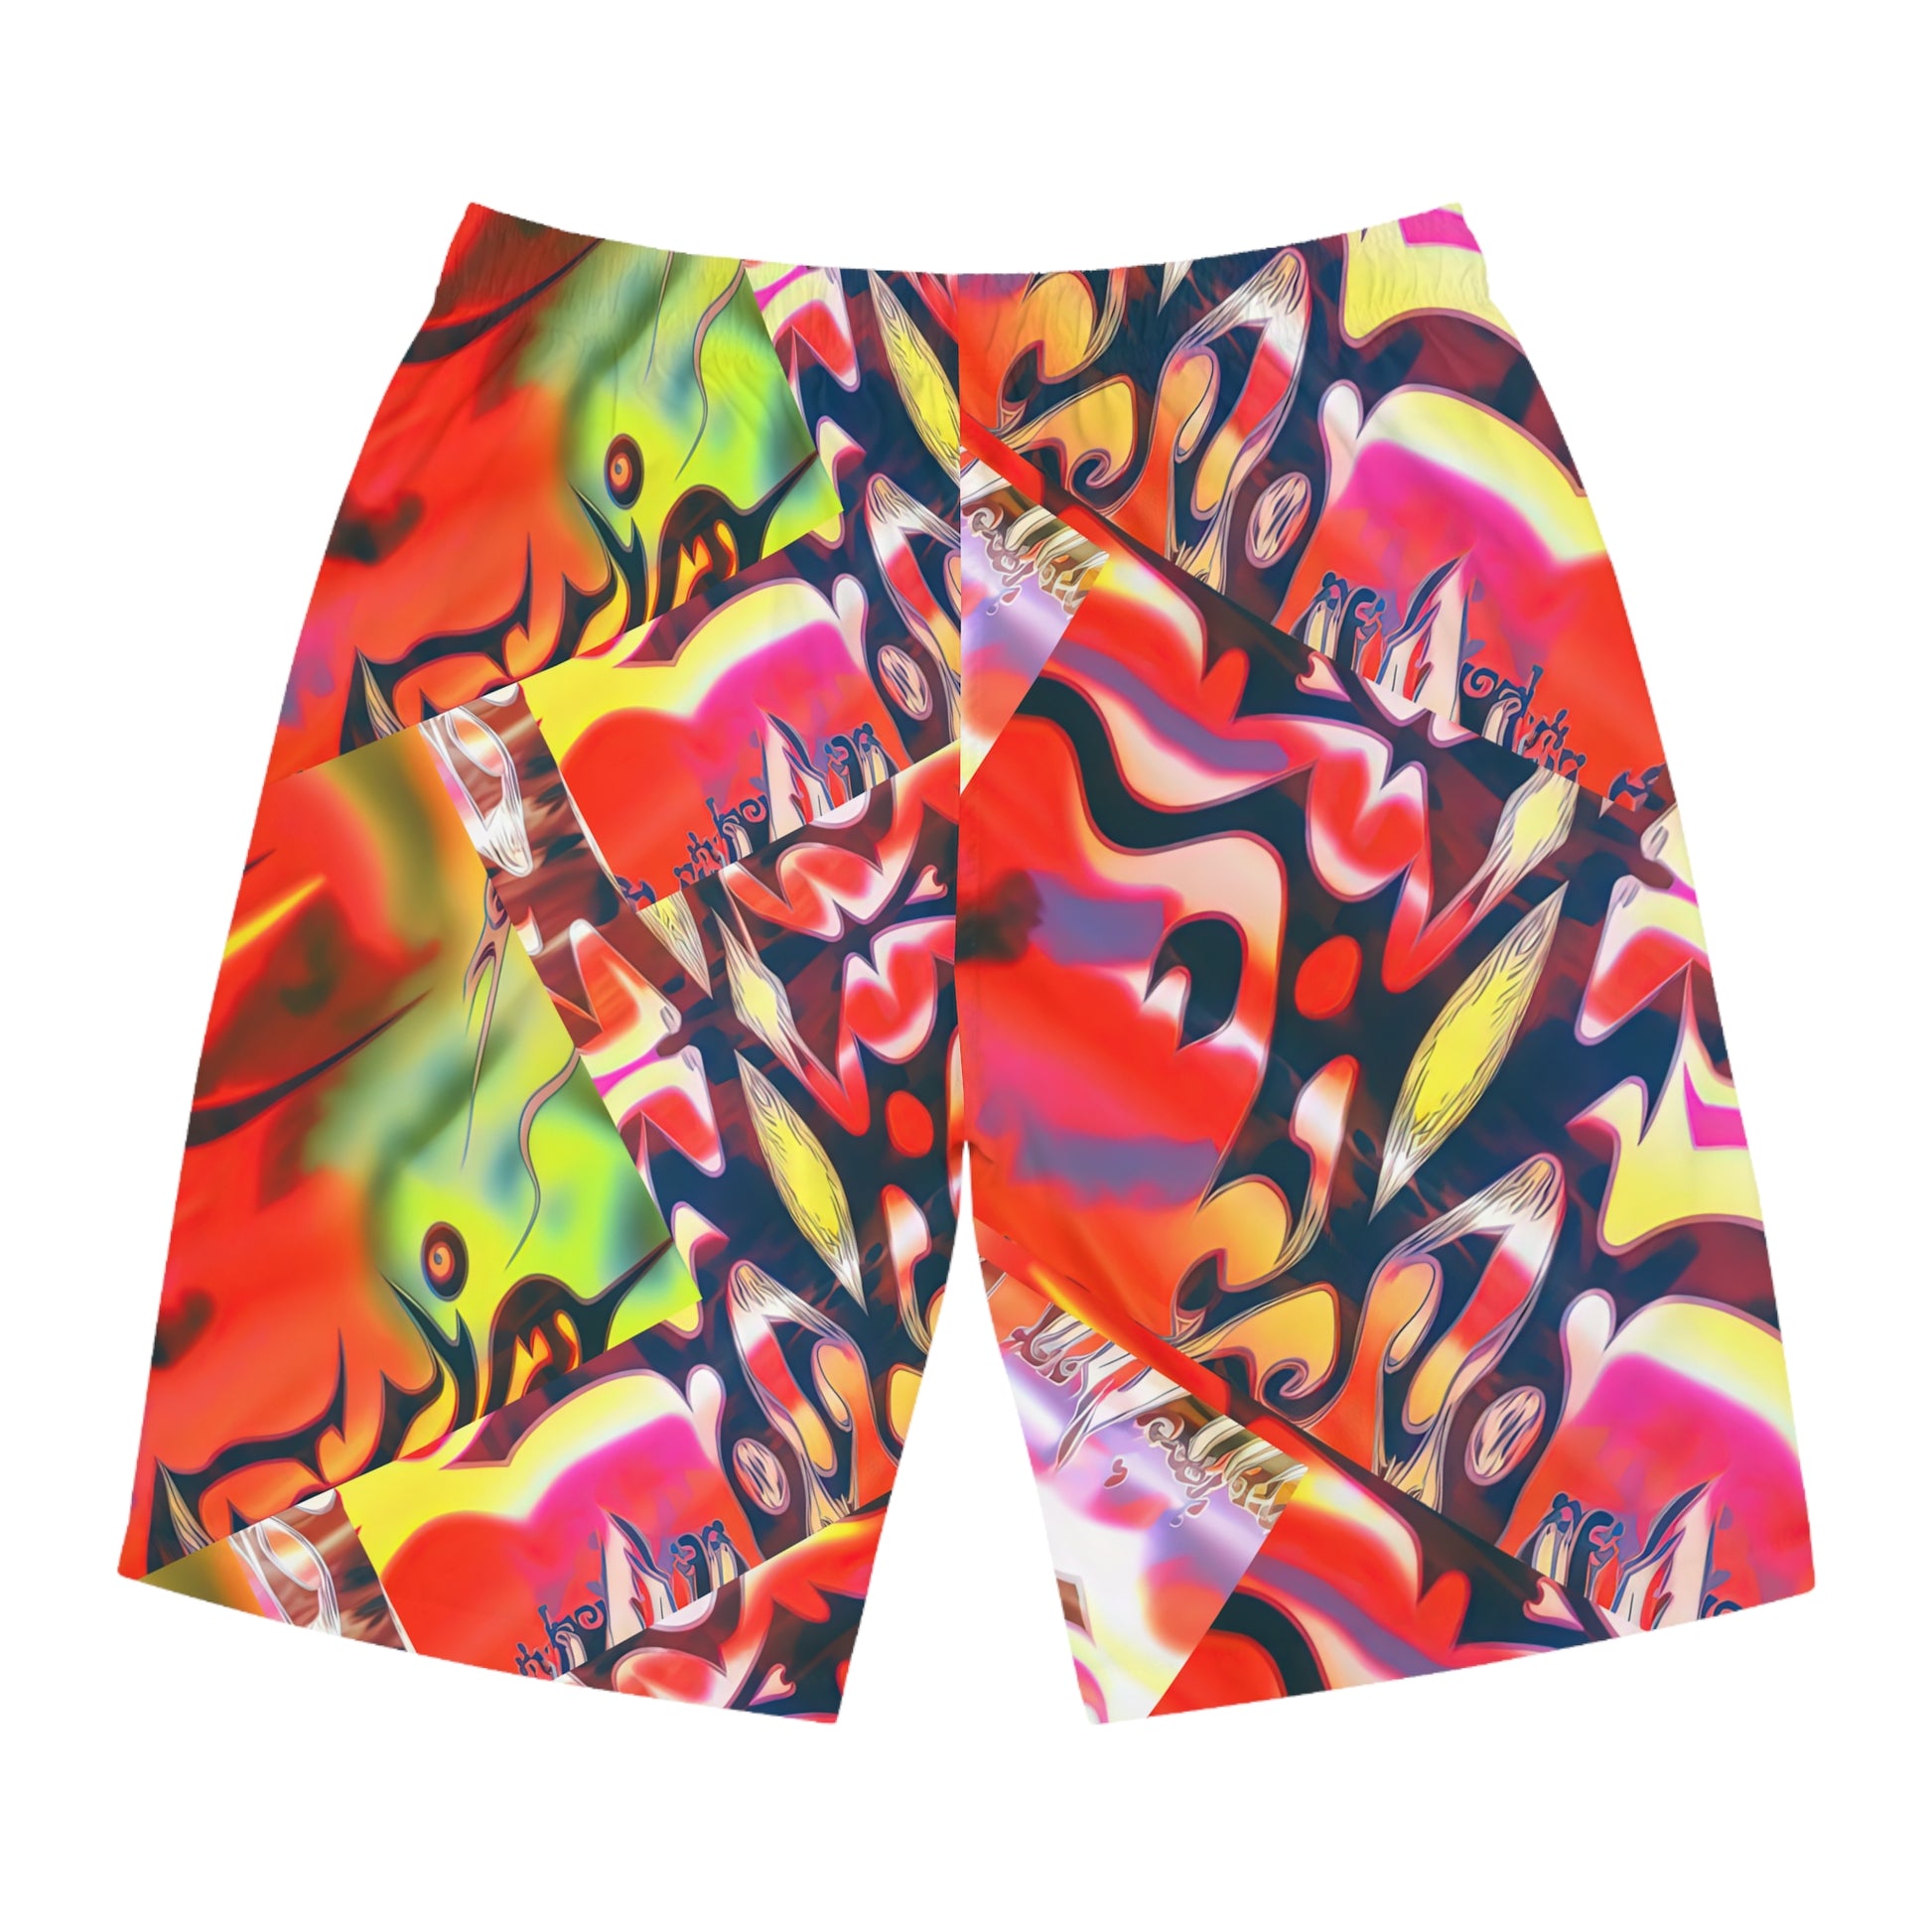 Y2Kiki Cool Shorts